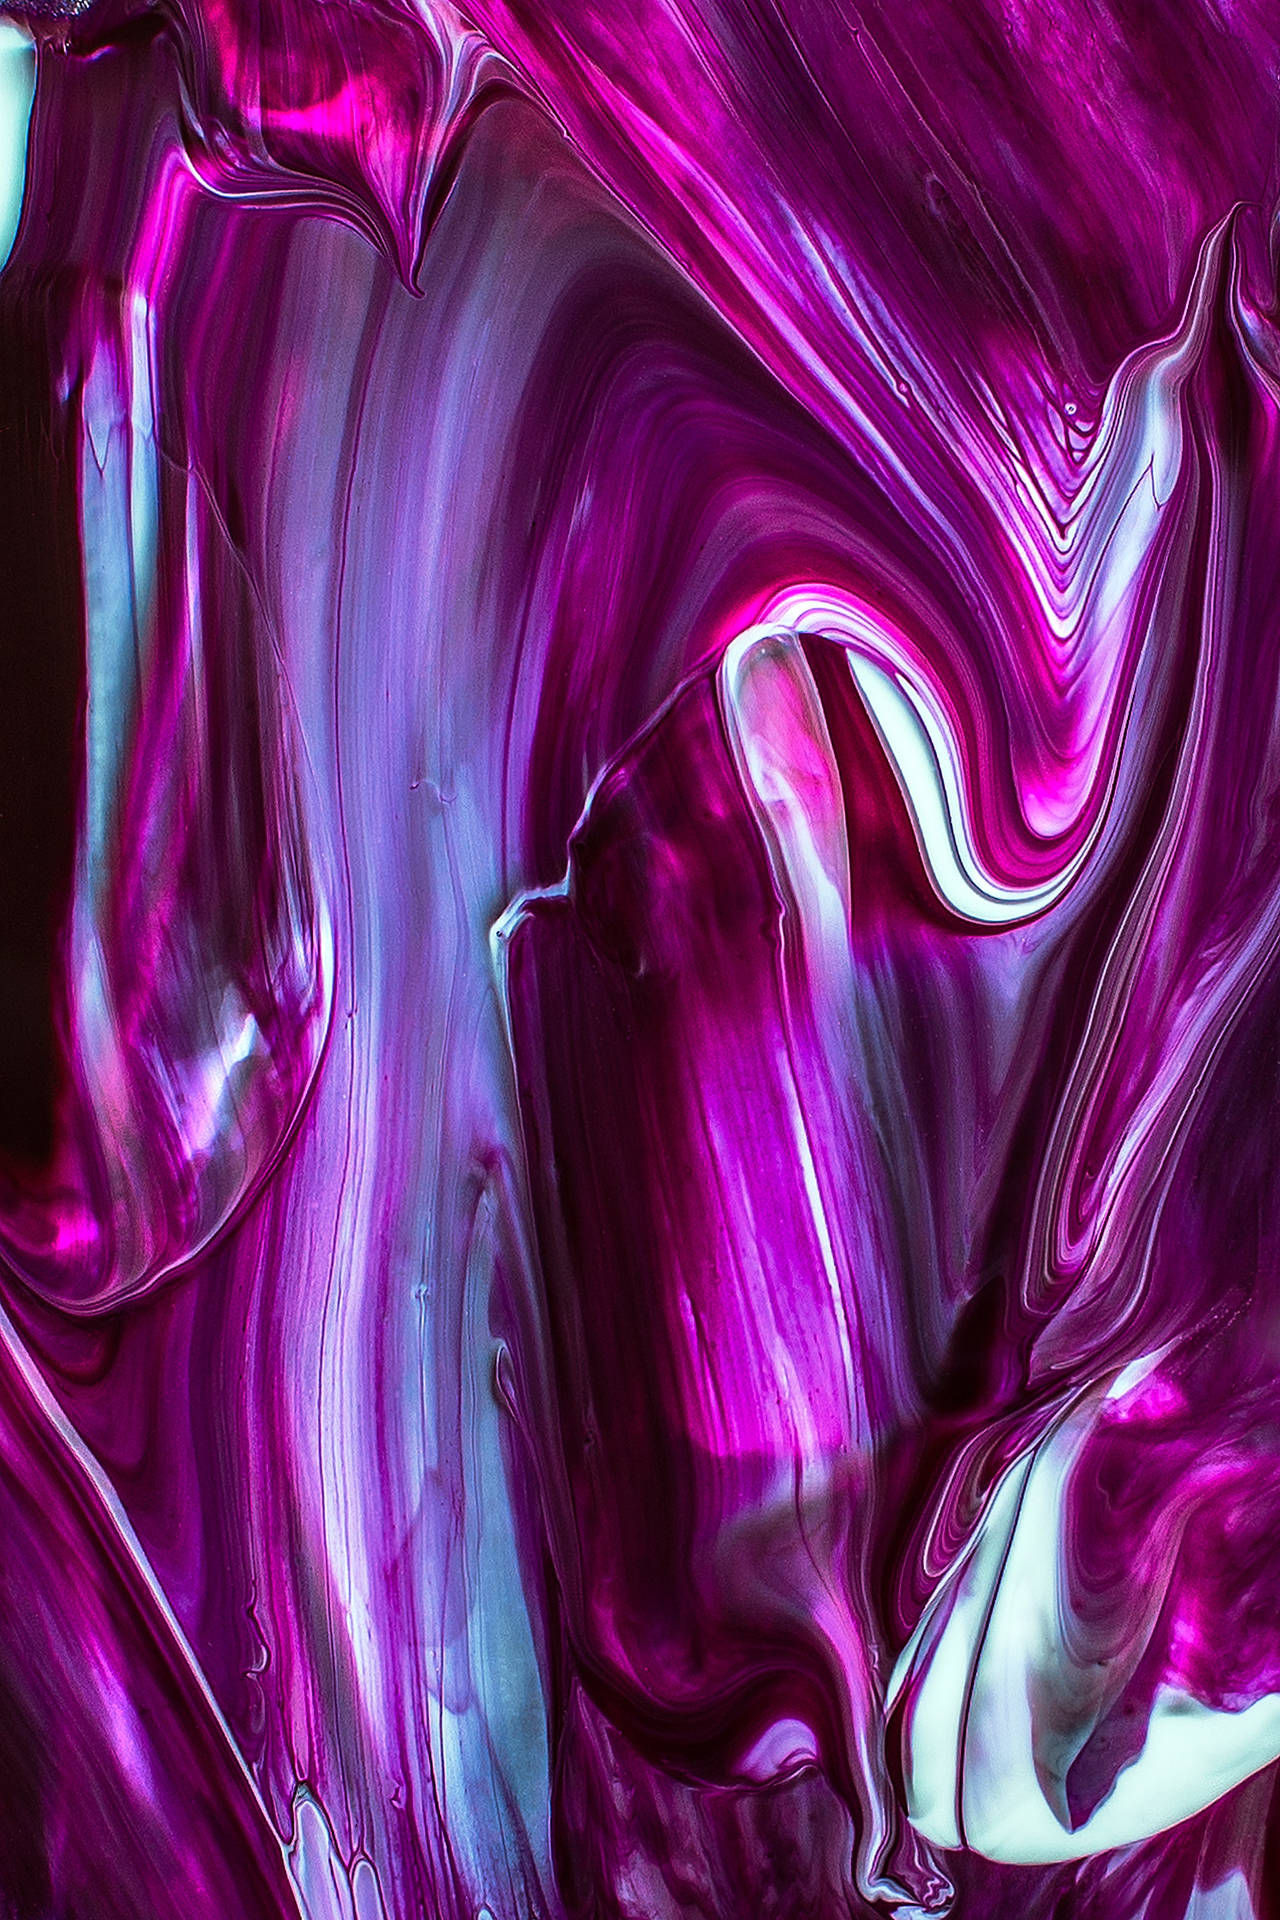 Hd Art Of Dripping Metallic Purple Background